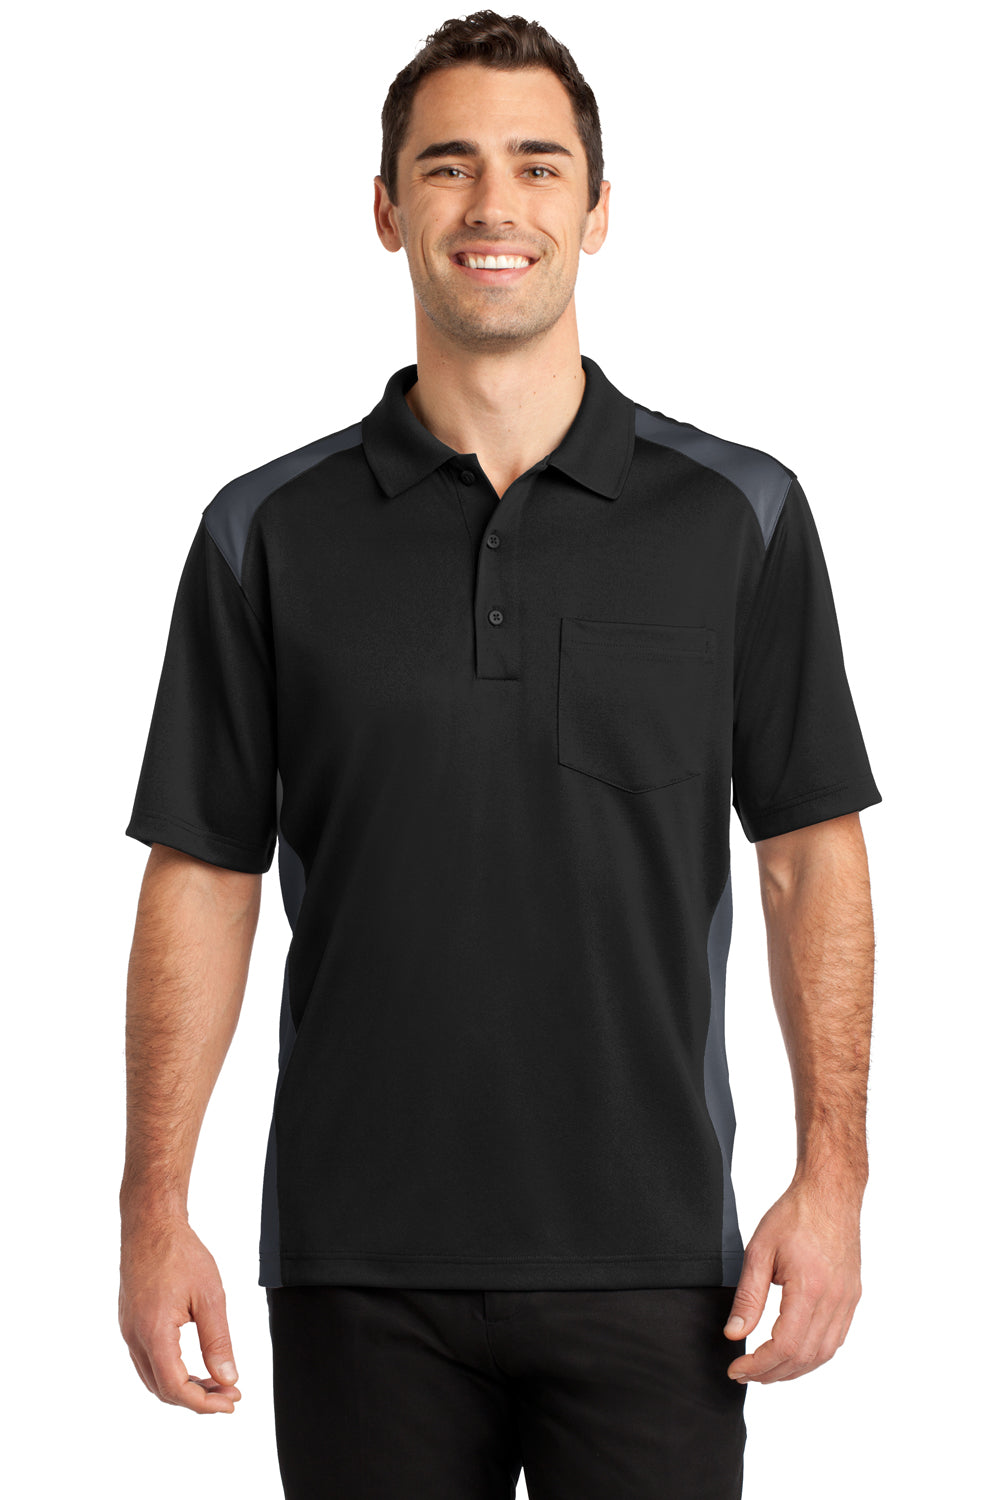 CornerStone CS416 Mens Select Moisture Wicking Short Sleeve Polo Shirt w/ Pocket Black/Charcoal Grey Front